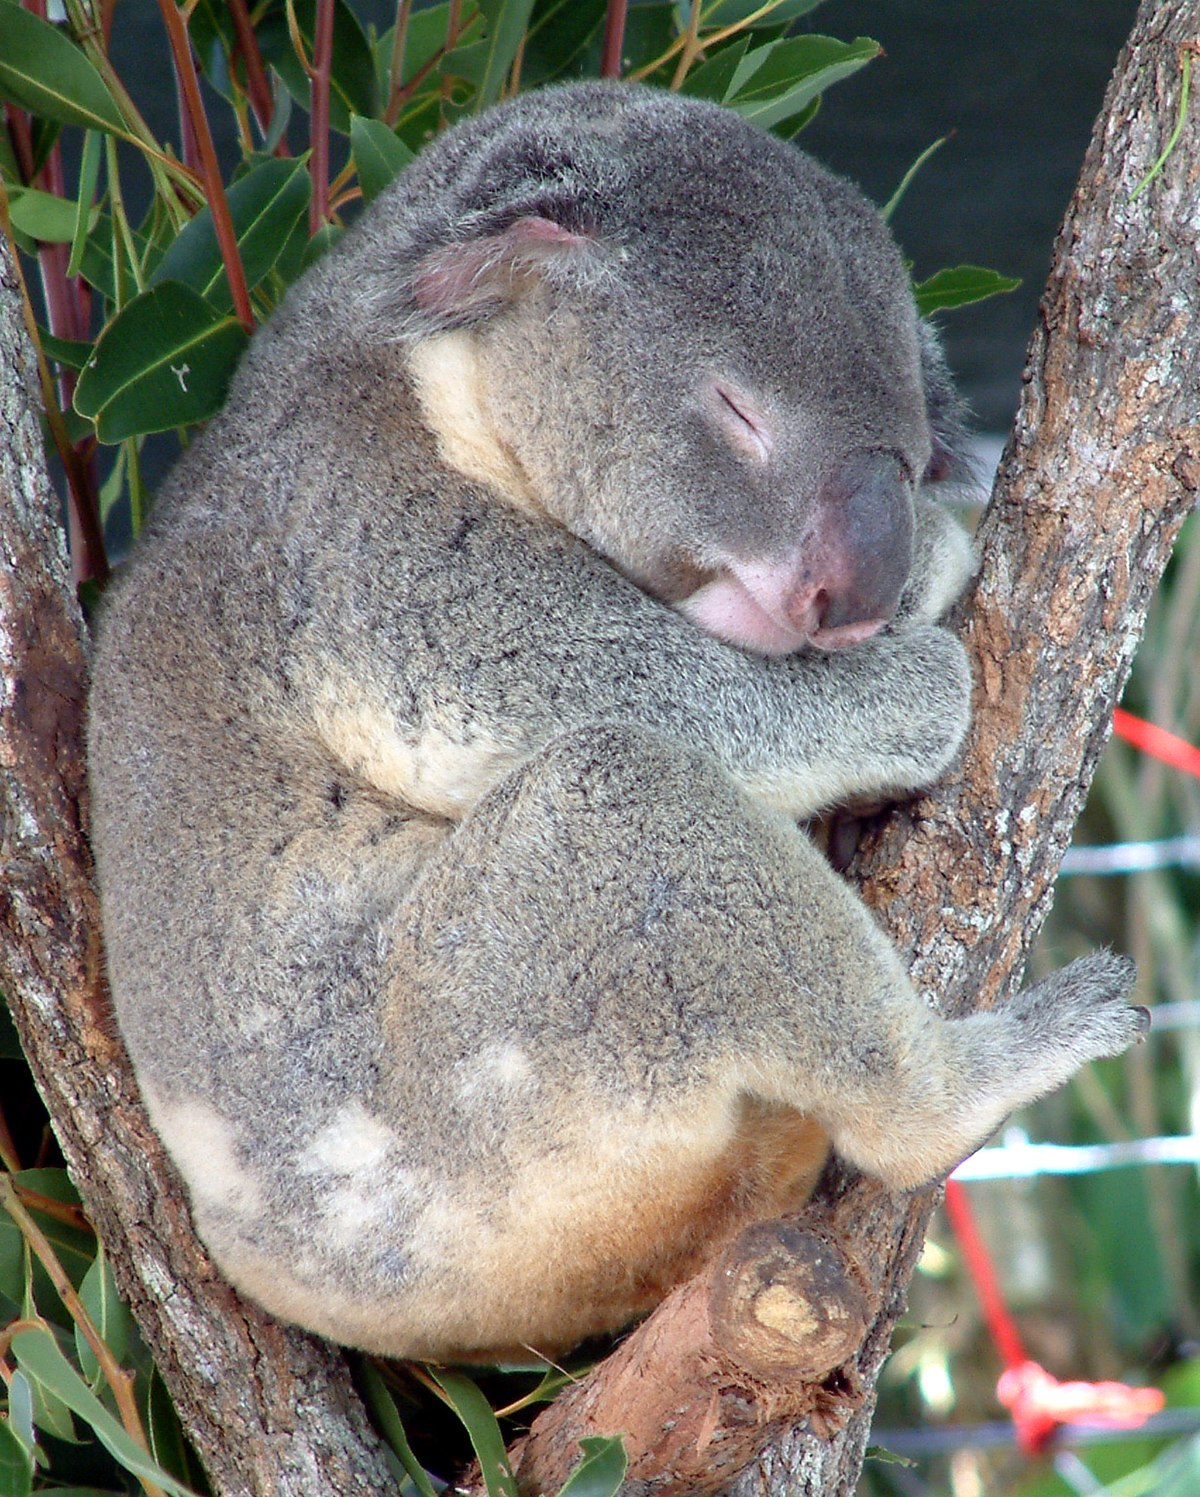 File:Australia Cairns Koala.jpg - Wikipedia